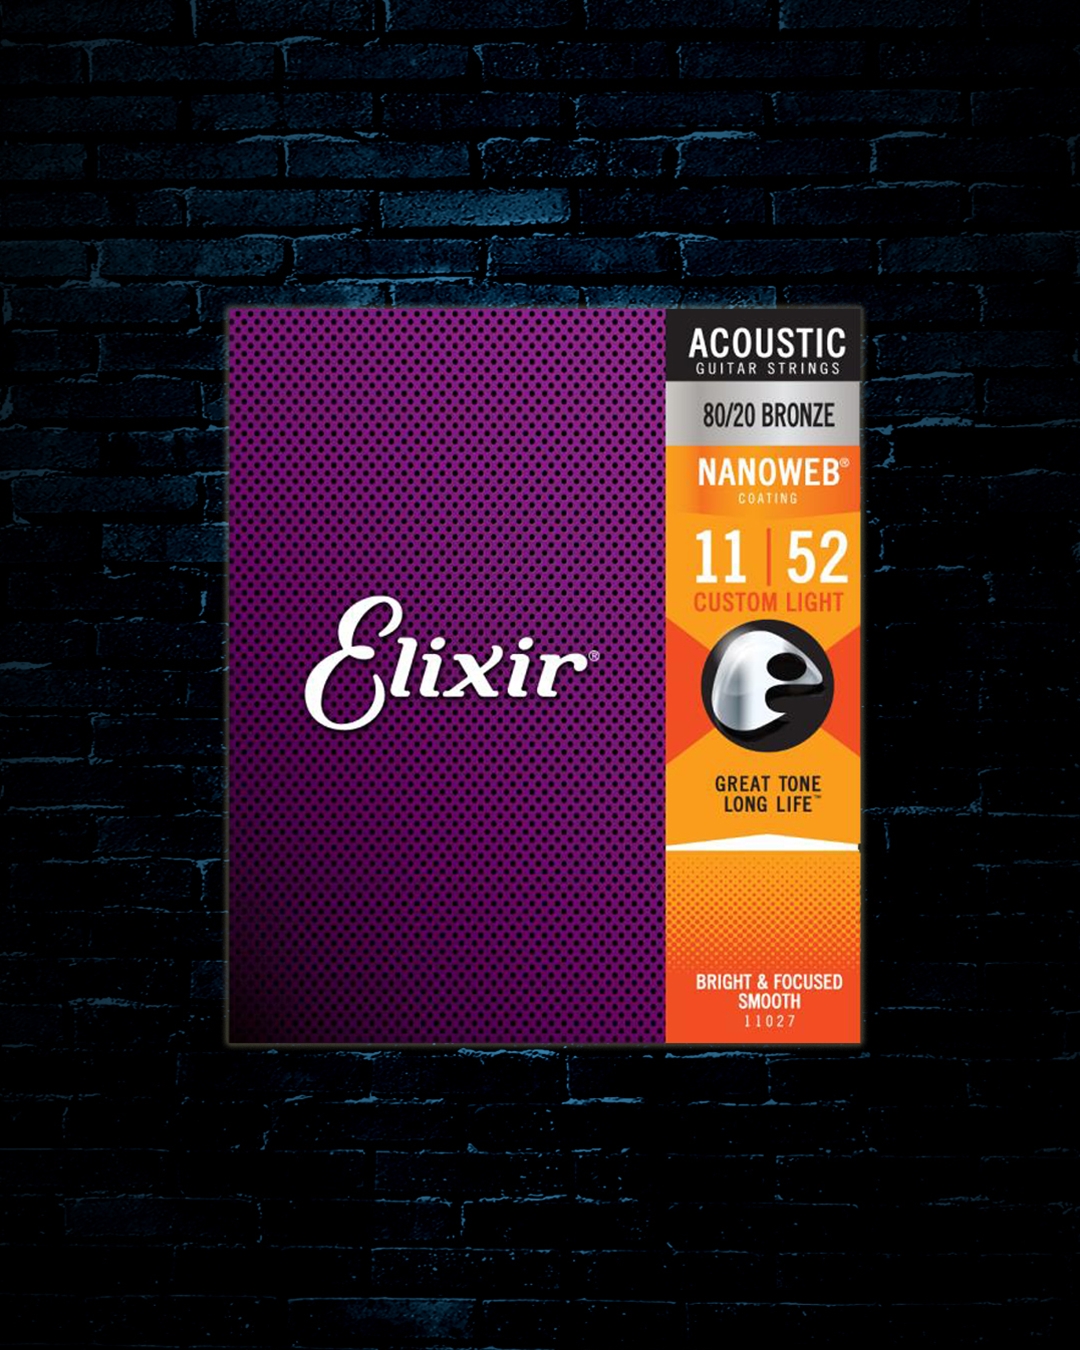 Elixir 11027 Nanoweb Acoustic Bronze 11-52 